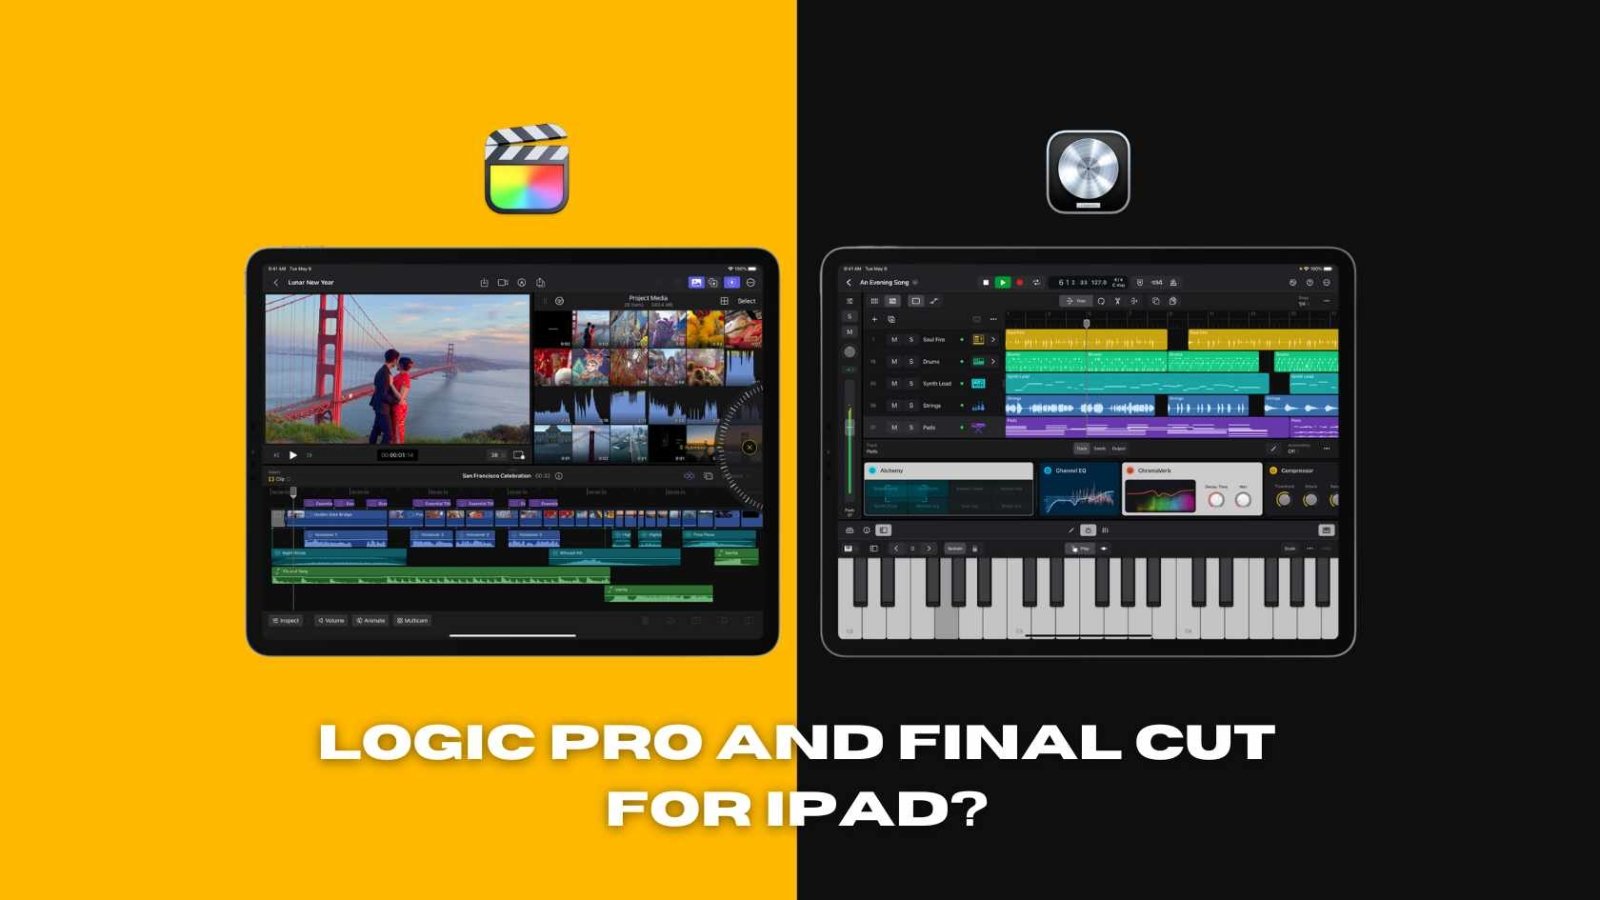 Apple Brings Final Cut Pro and Logic Pro to iPad! - Editors Keys